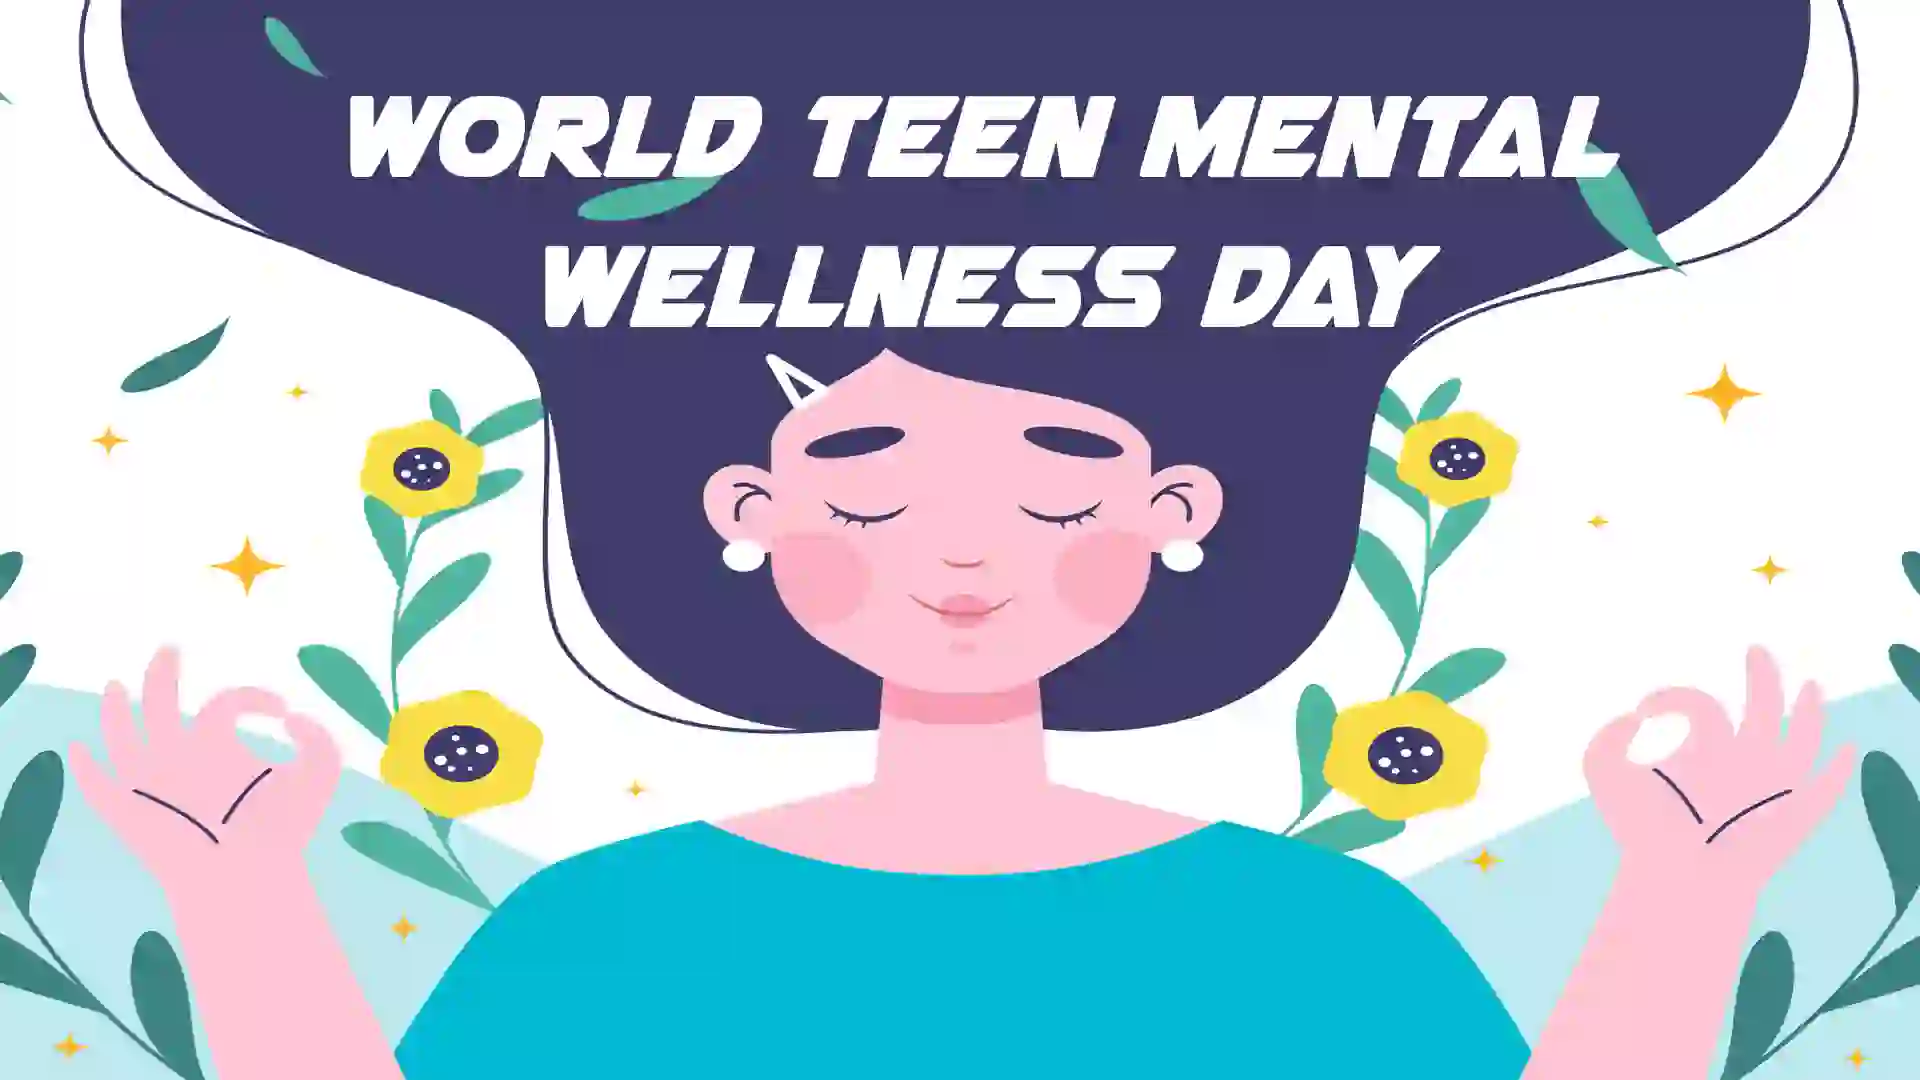 World Teen Mental Wellness Day This Post Design By The Revolution Deshbhakt Hindustani